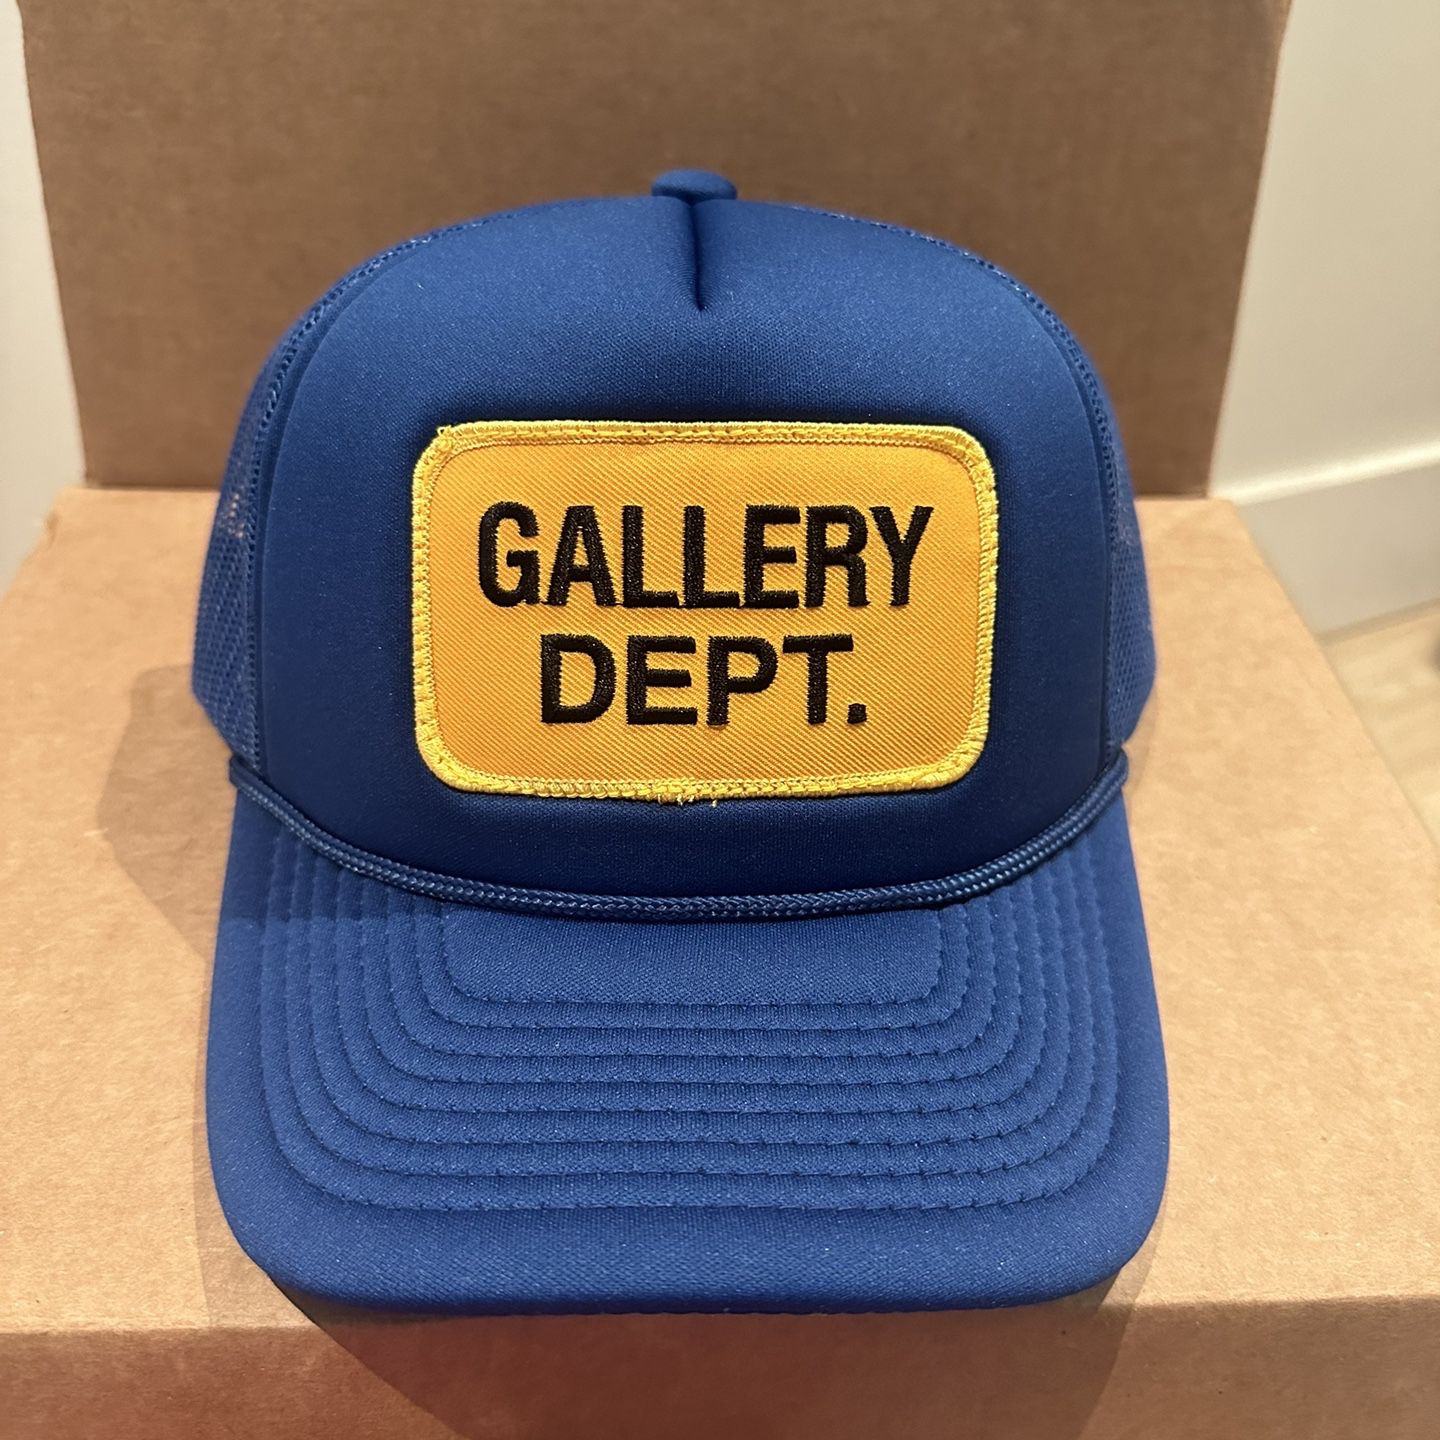 Gallery Dept. Blue Souvenir Trucker Hat - 100% Authentic for Sale in 